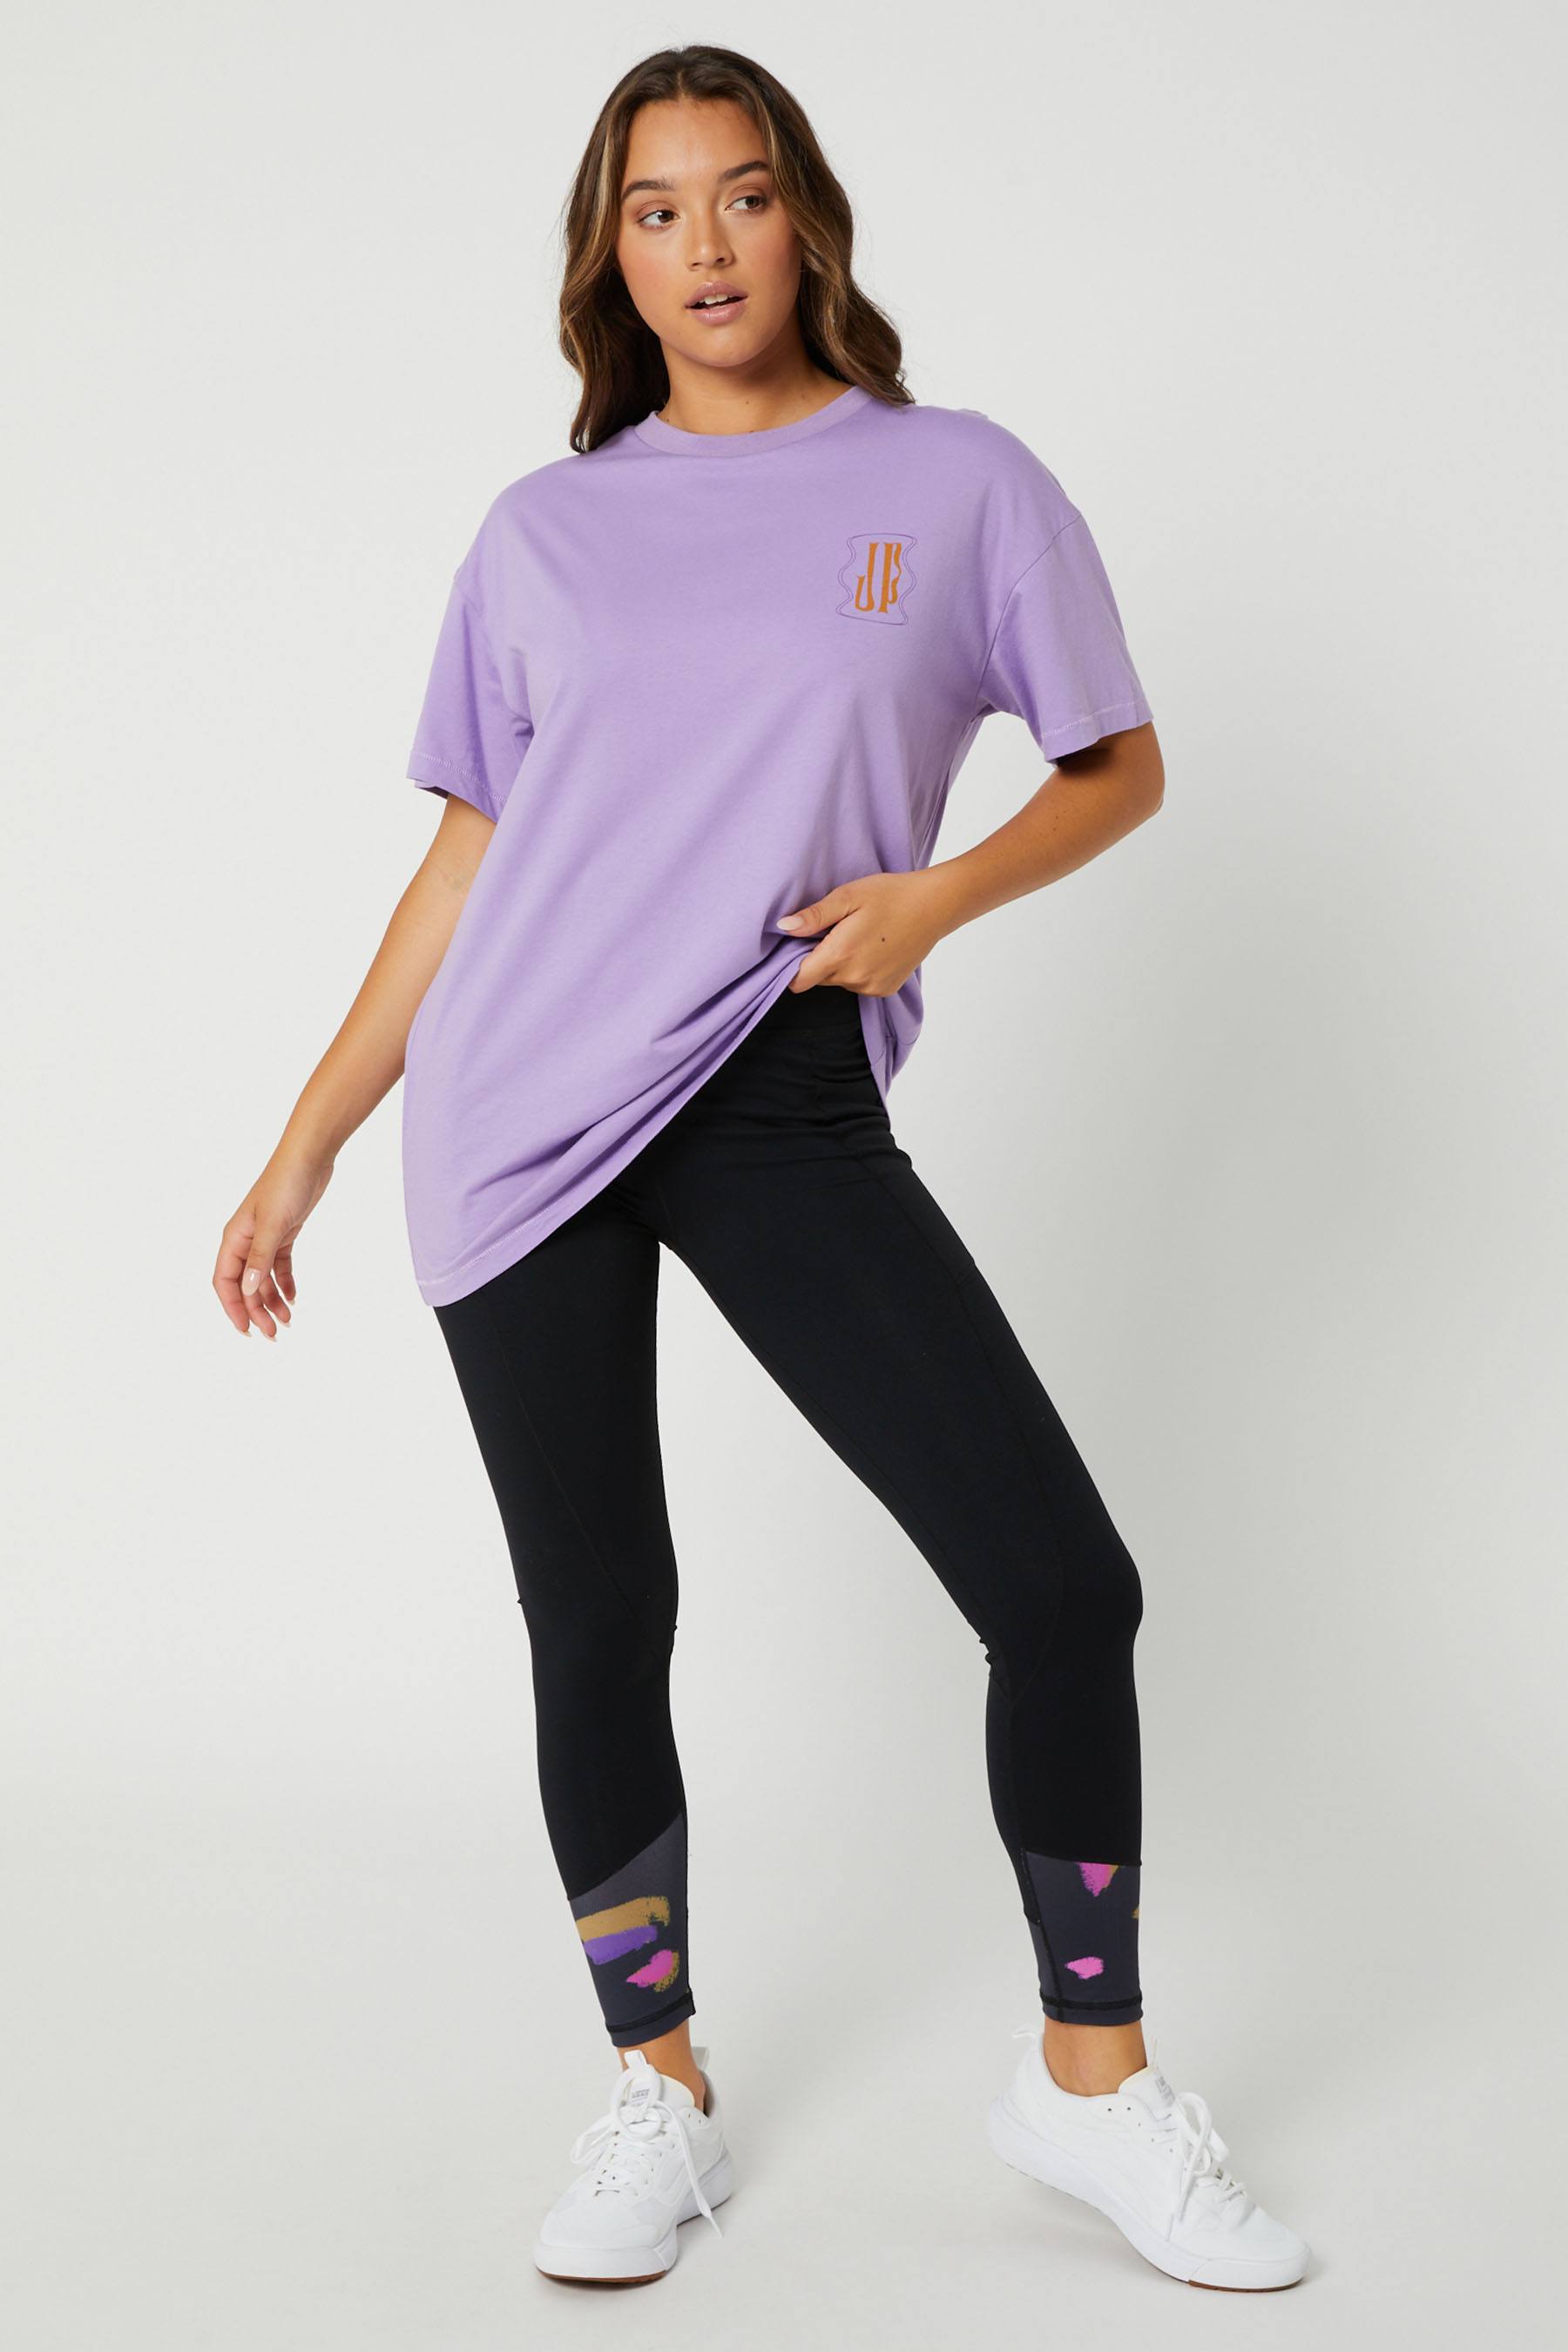 Jetpilot X Sina Eyes - Ladies S/S T-Shirt - Purple